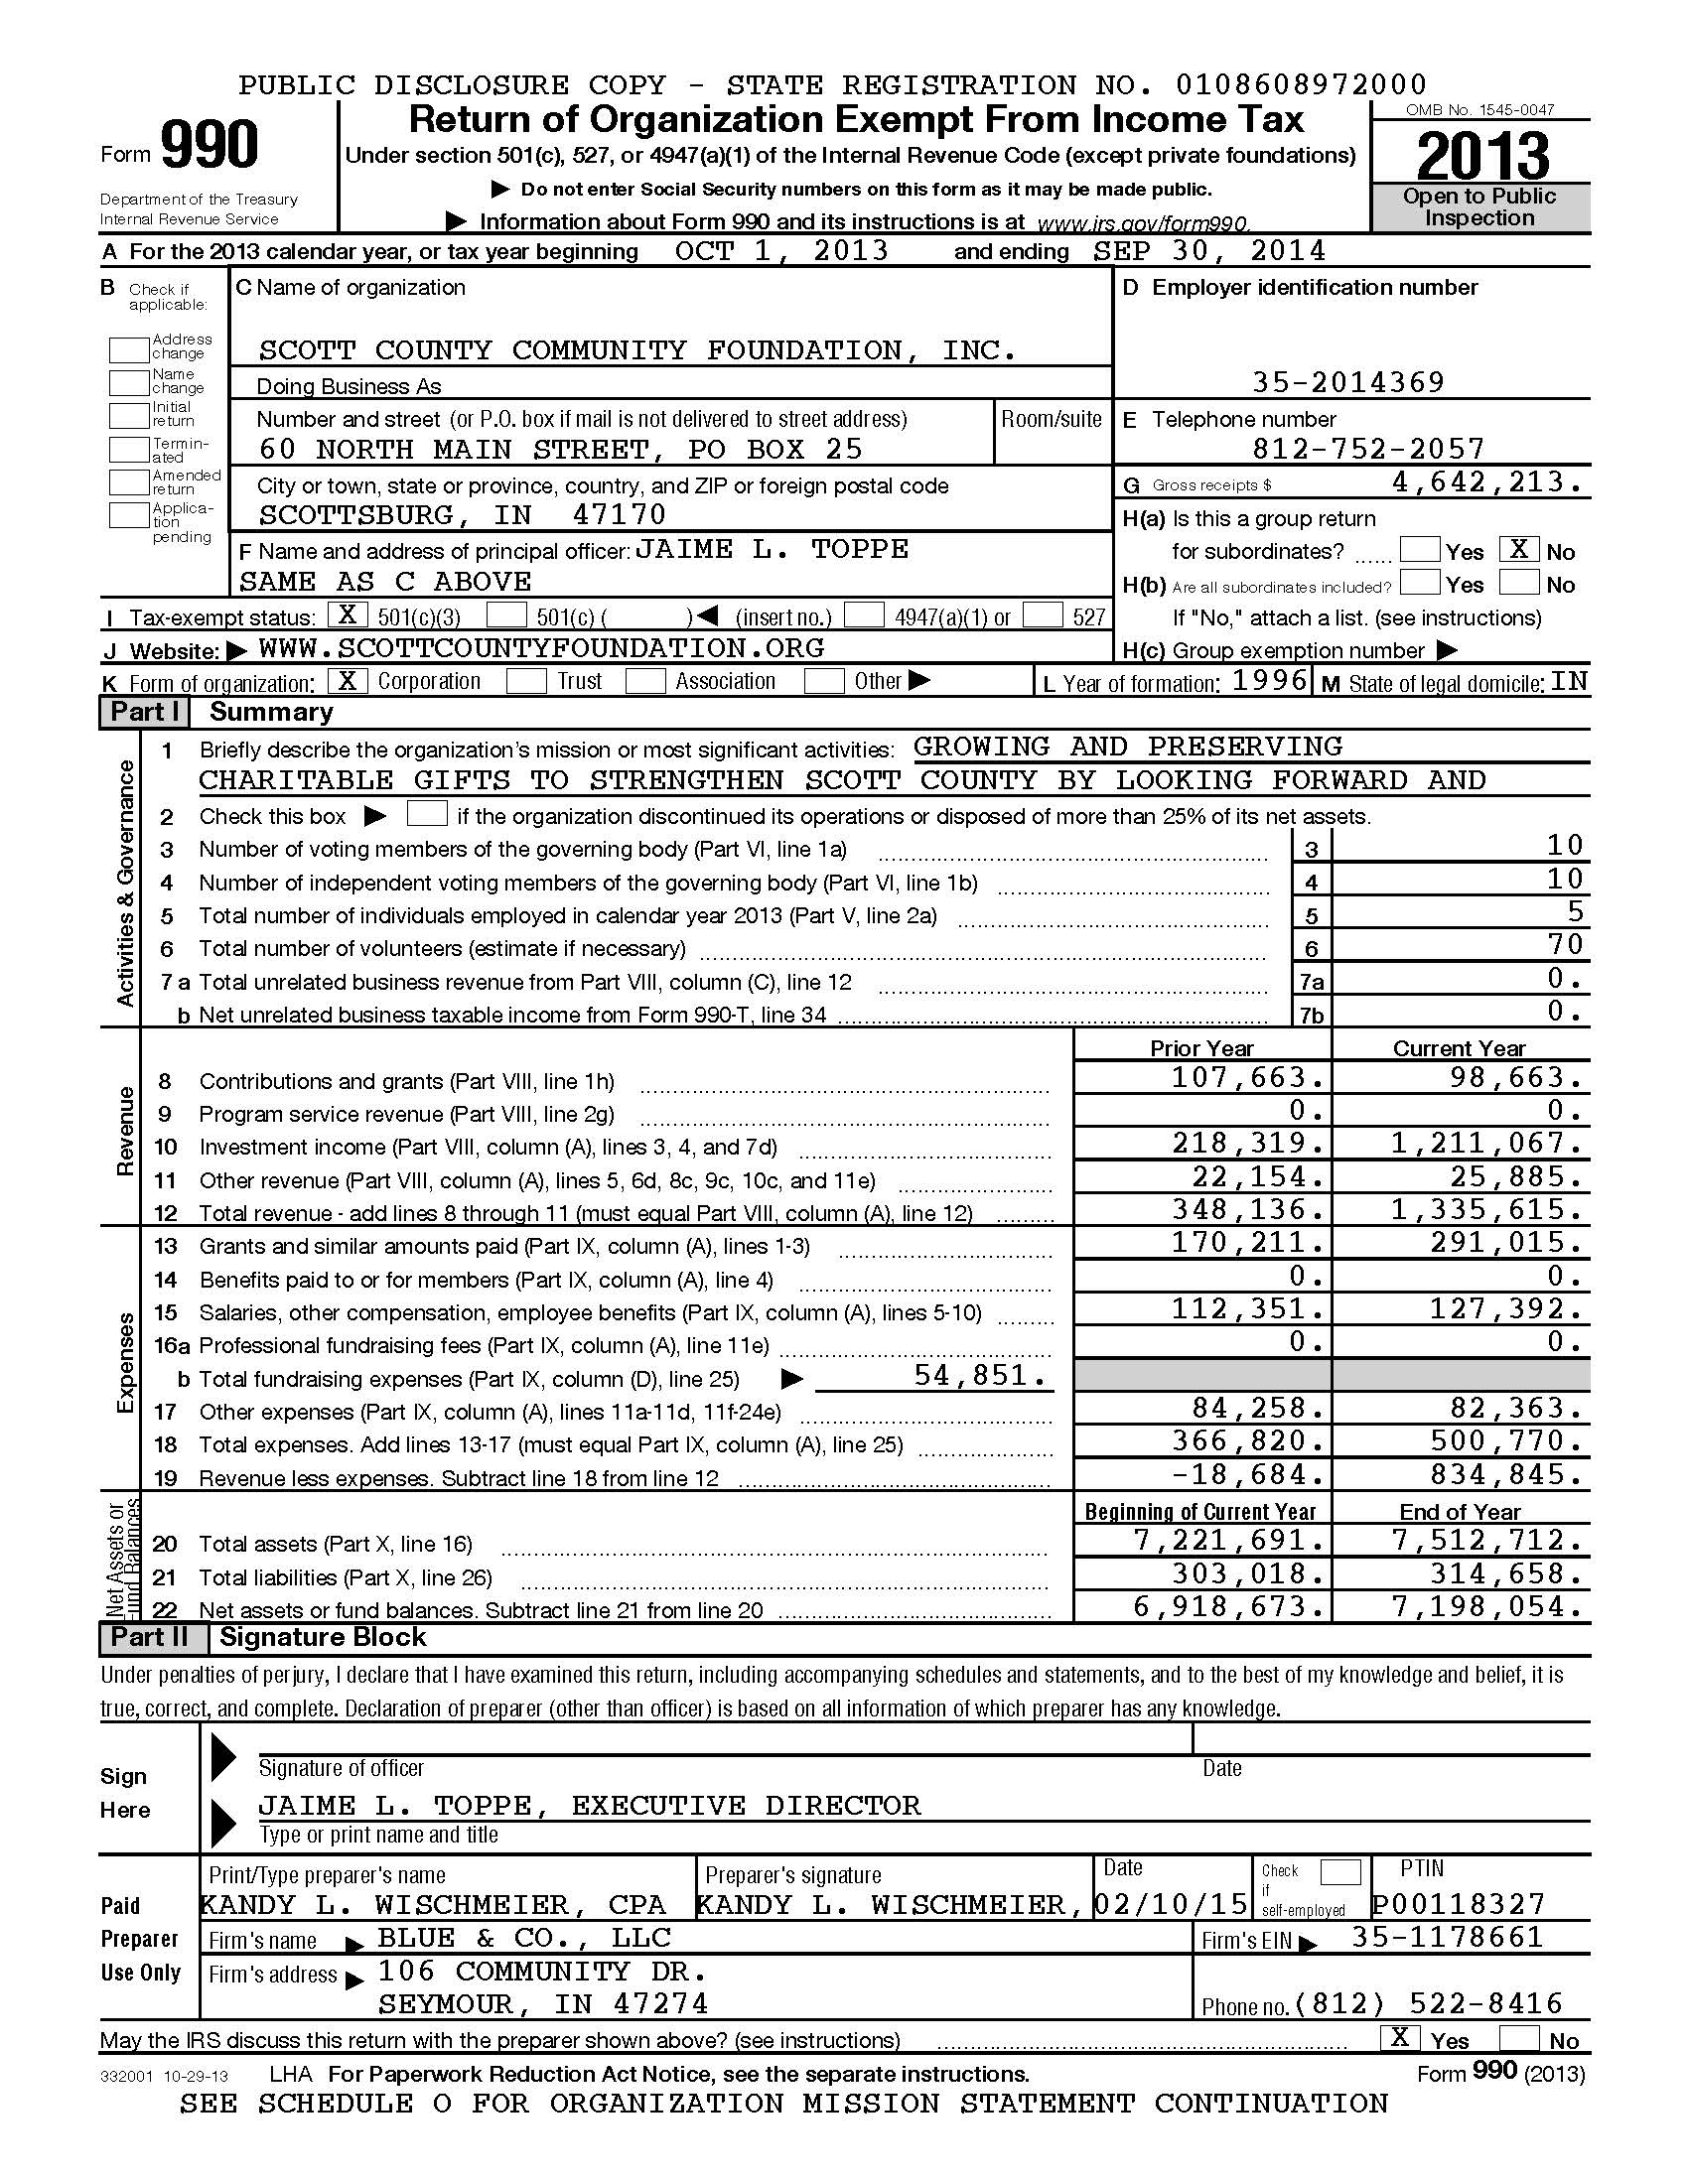 2013 IRS 990 Report